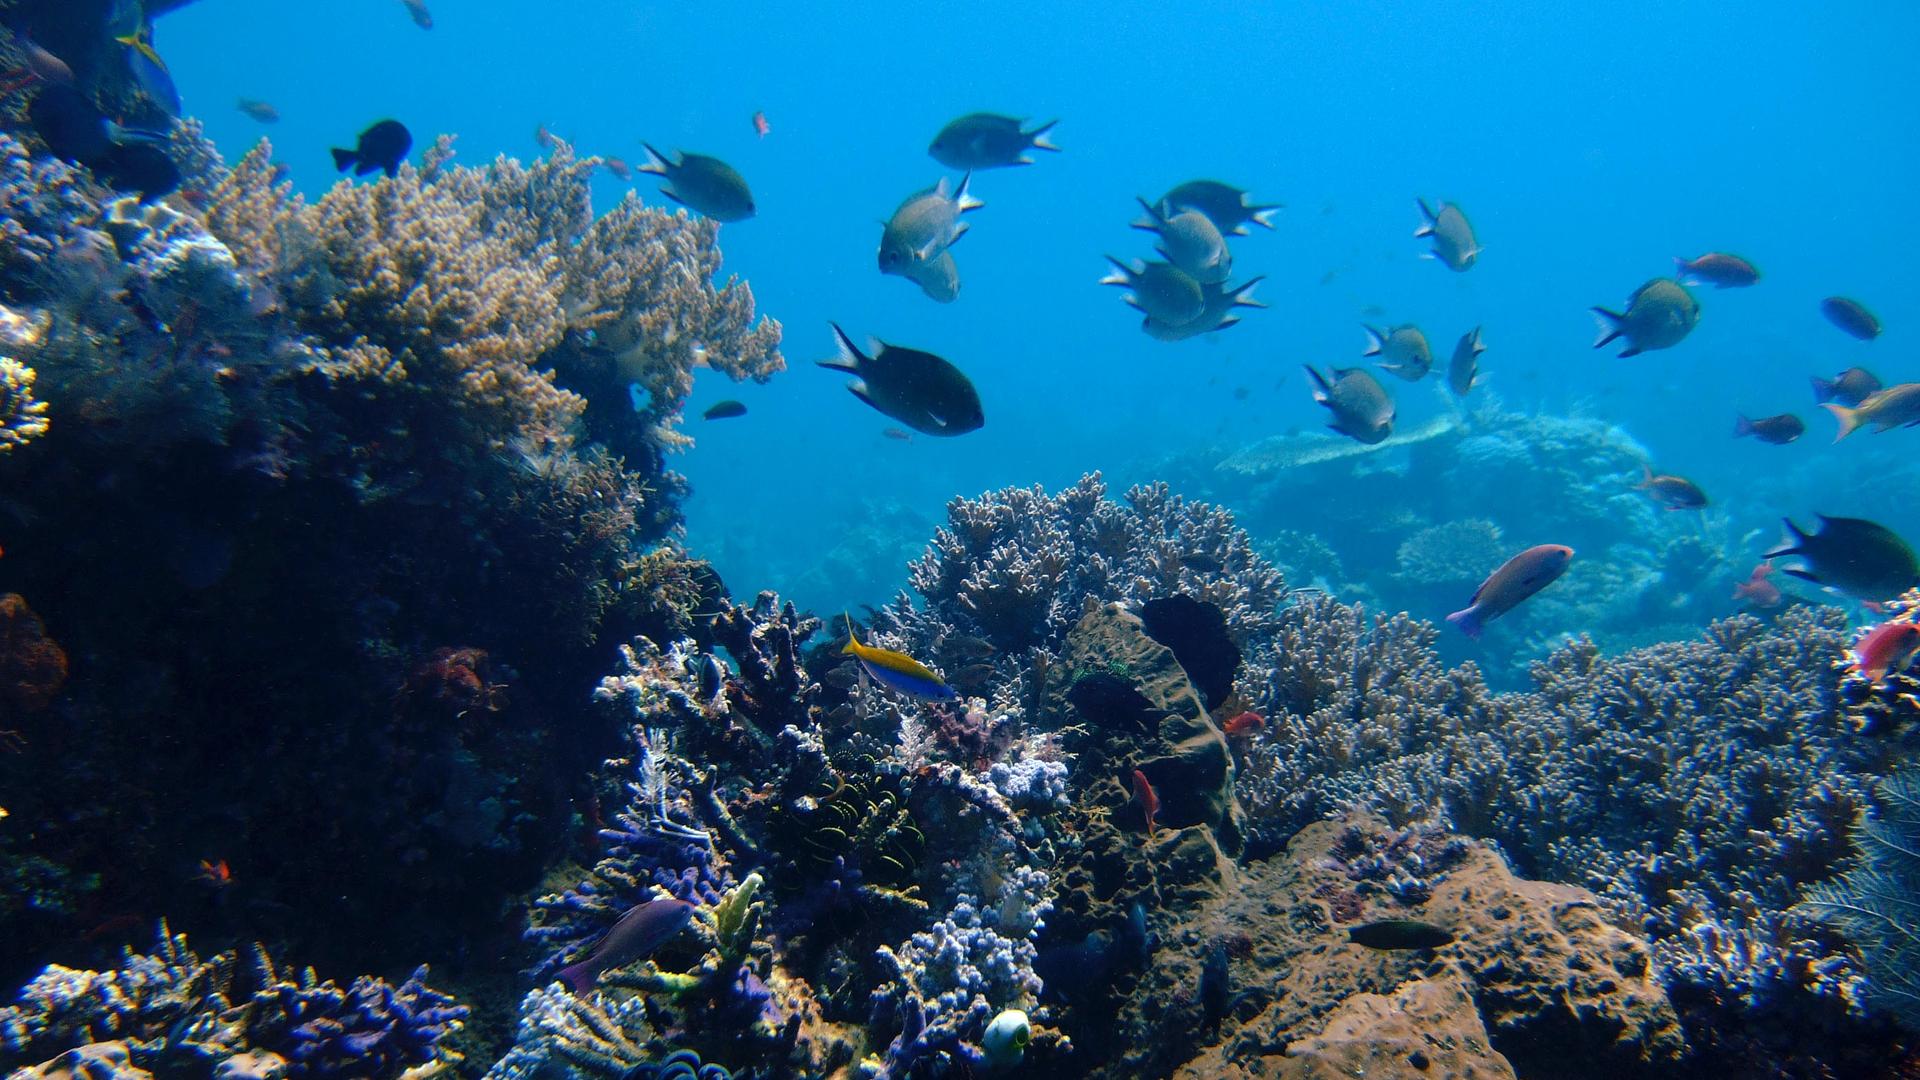 Coral reefs grow in the waters of Tatawa Besar, Komodo islands, Indonesia, April 30, 2009.